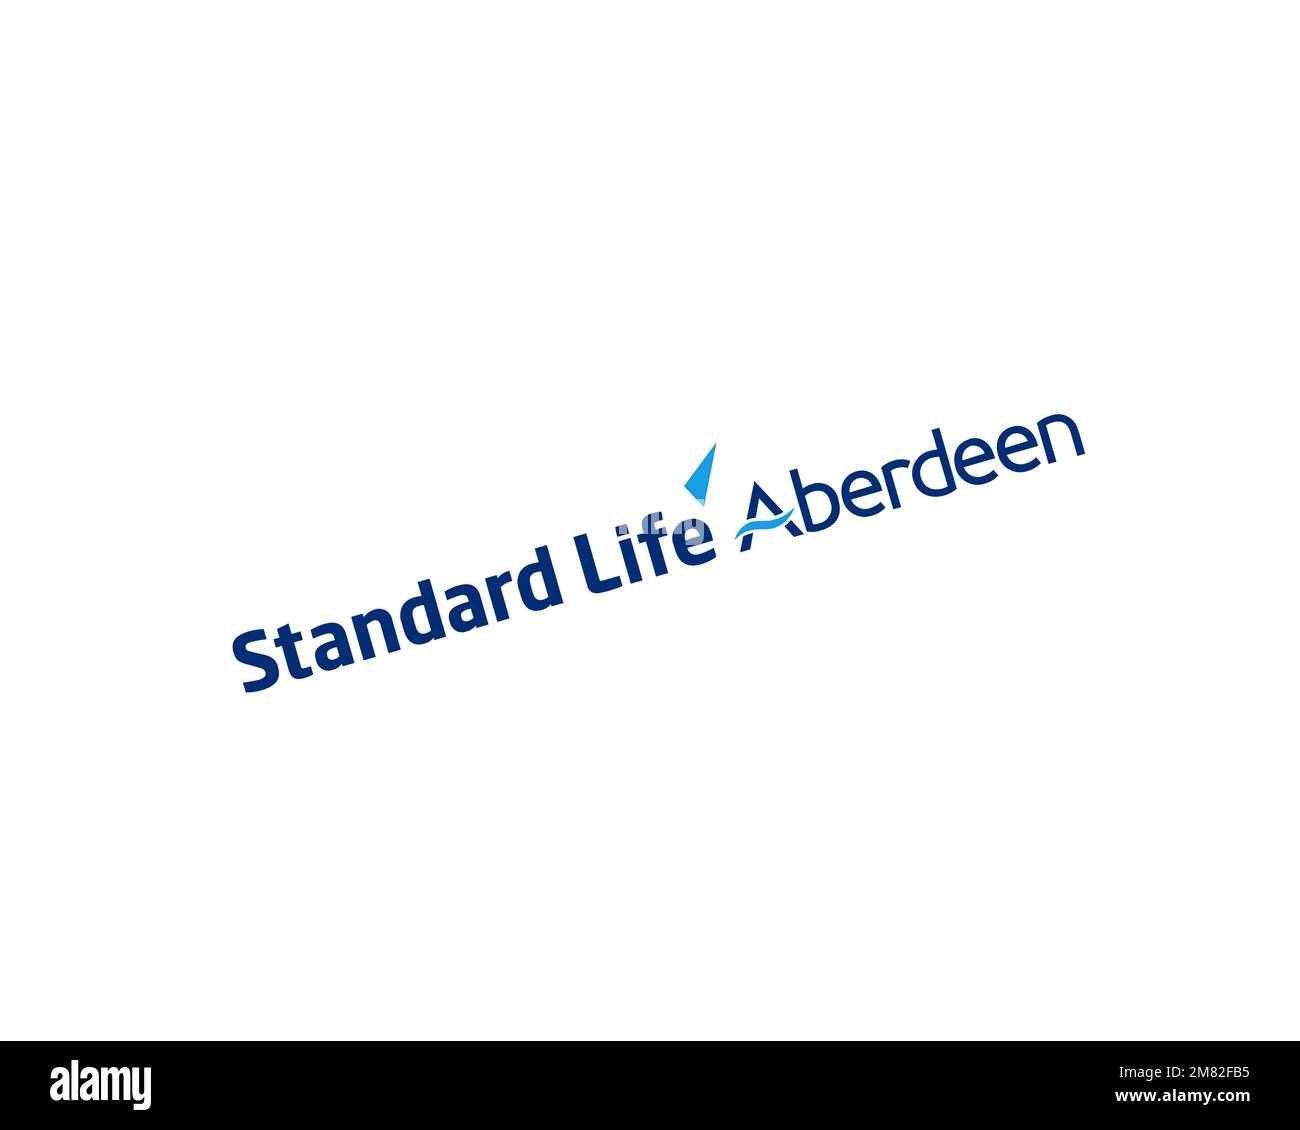 Standard Life Aberdeen, logo ruotato, sfondo bianco Foto Stock